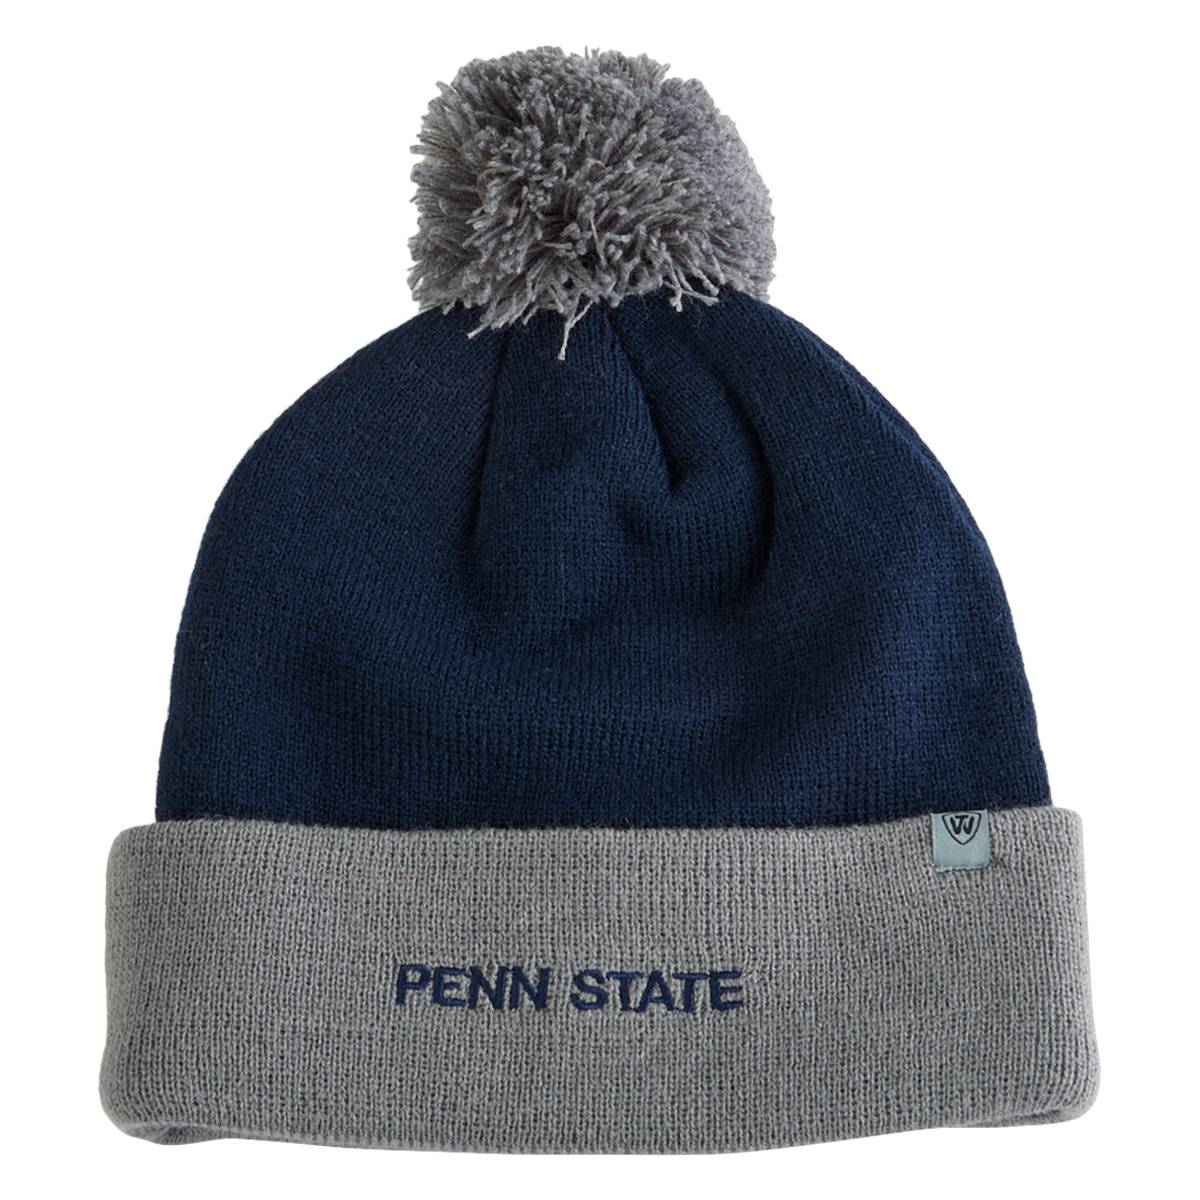 Mens Fanatics Penn State Tow Pom Winter Hat